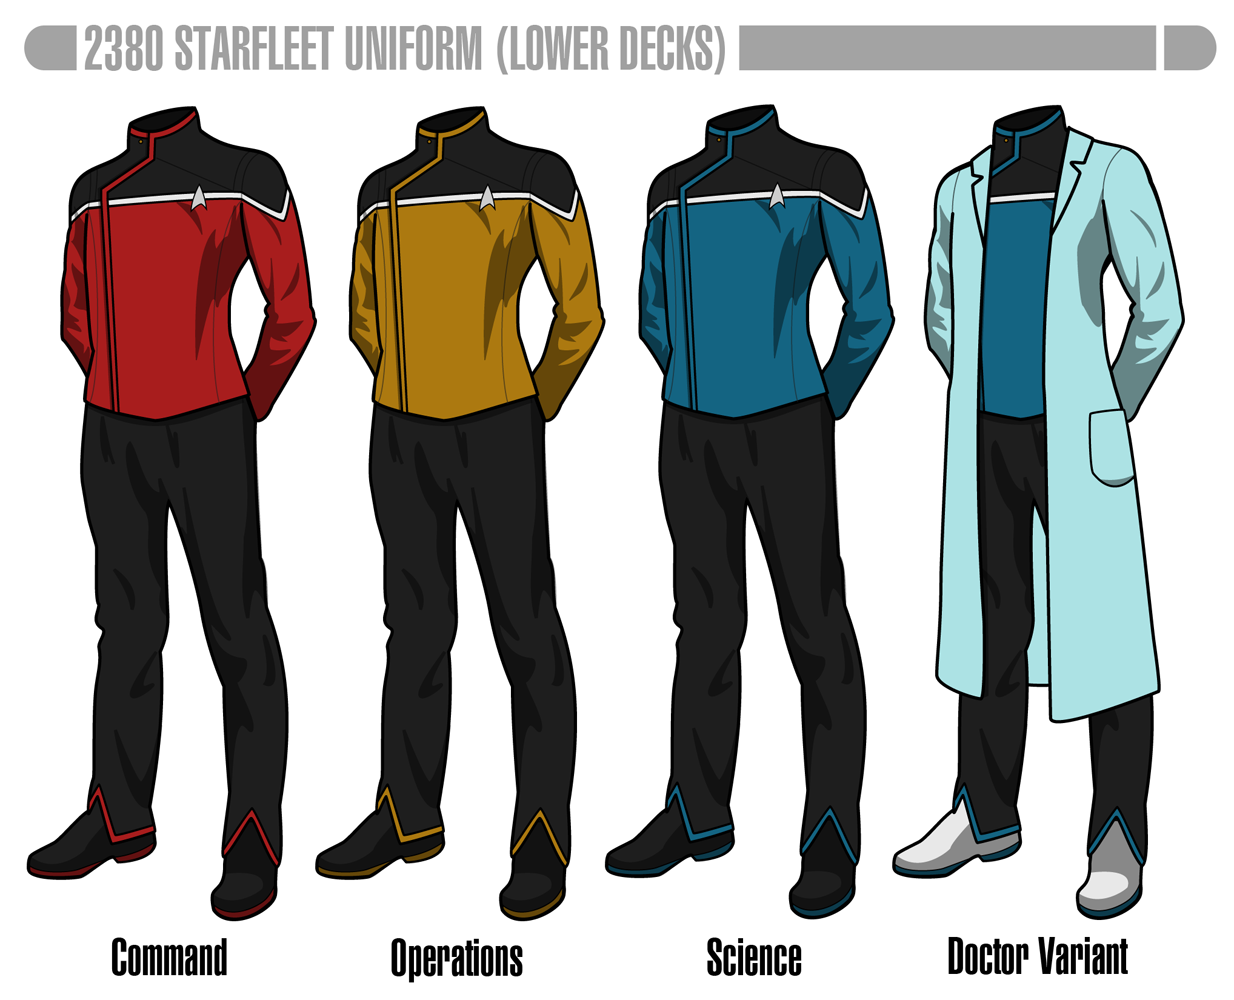 lower-decks-uniforms.png